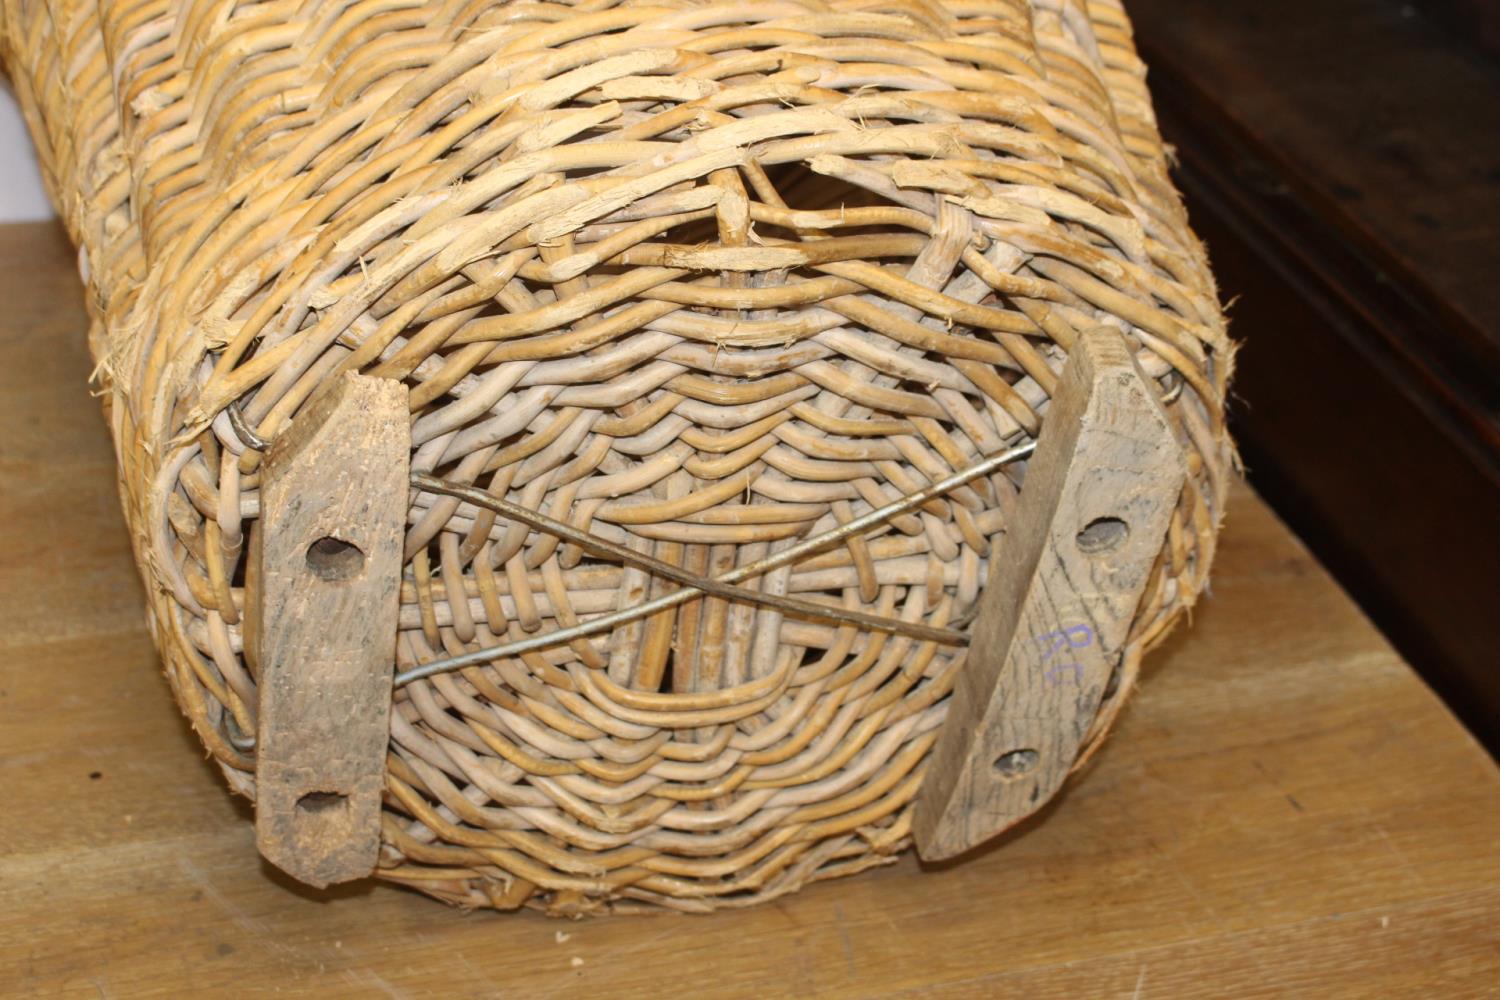 Wicker laundry/ log basket { 80cm H X 60cm Dia }. - Image 3 of 3